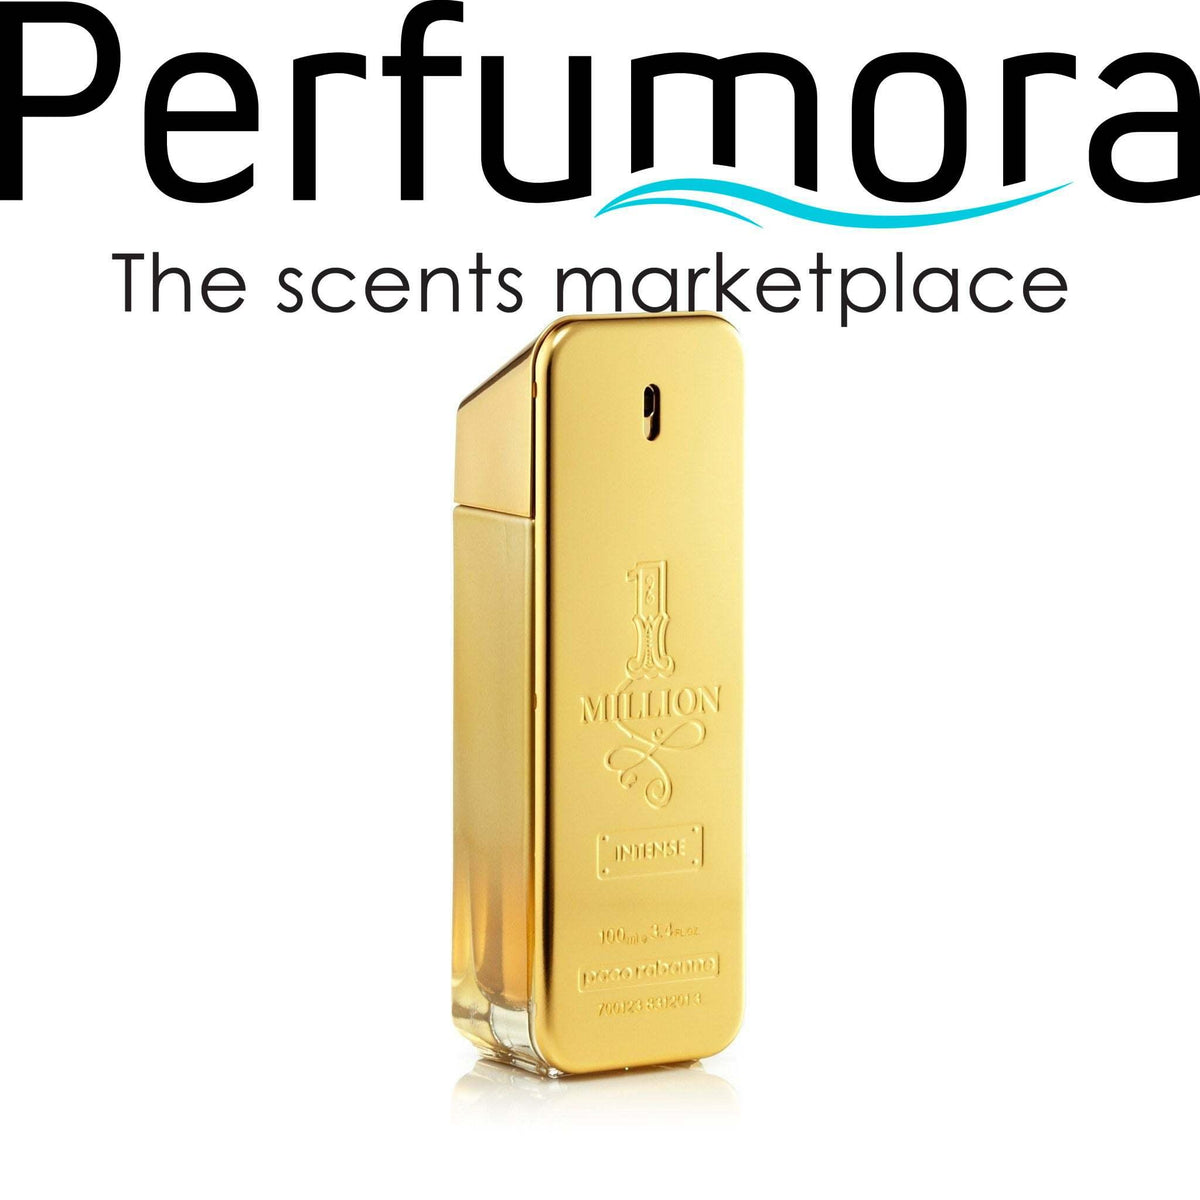 1 Million Intense Eau de Toilette Spray for Men by Paco Rabanne Perfumora